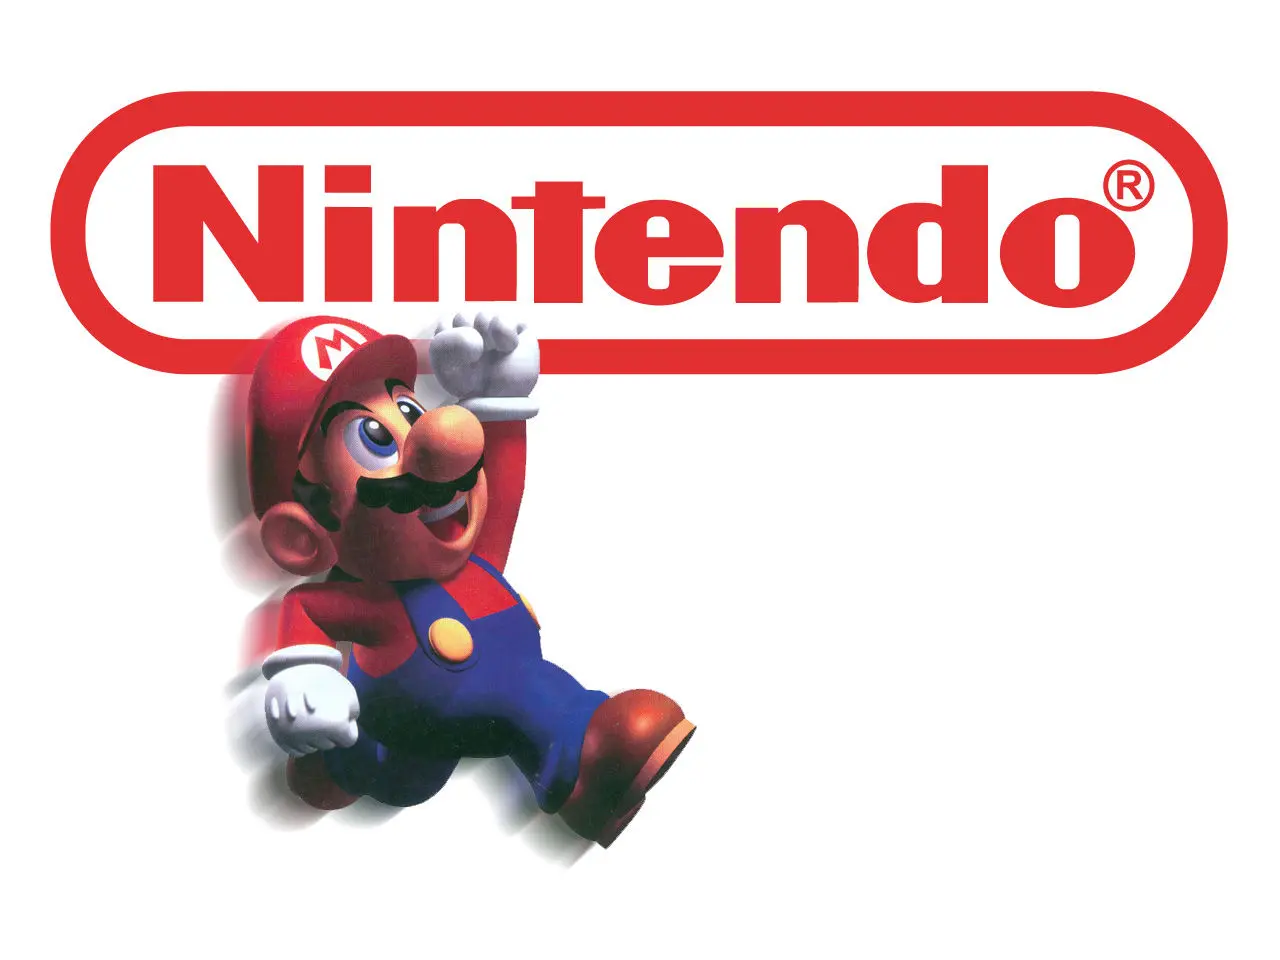 L’ancien président de Nintendo est mort